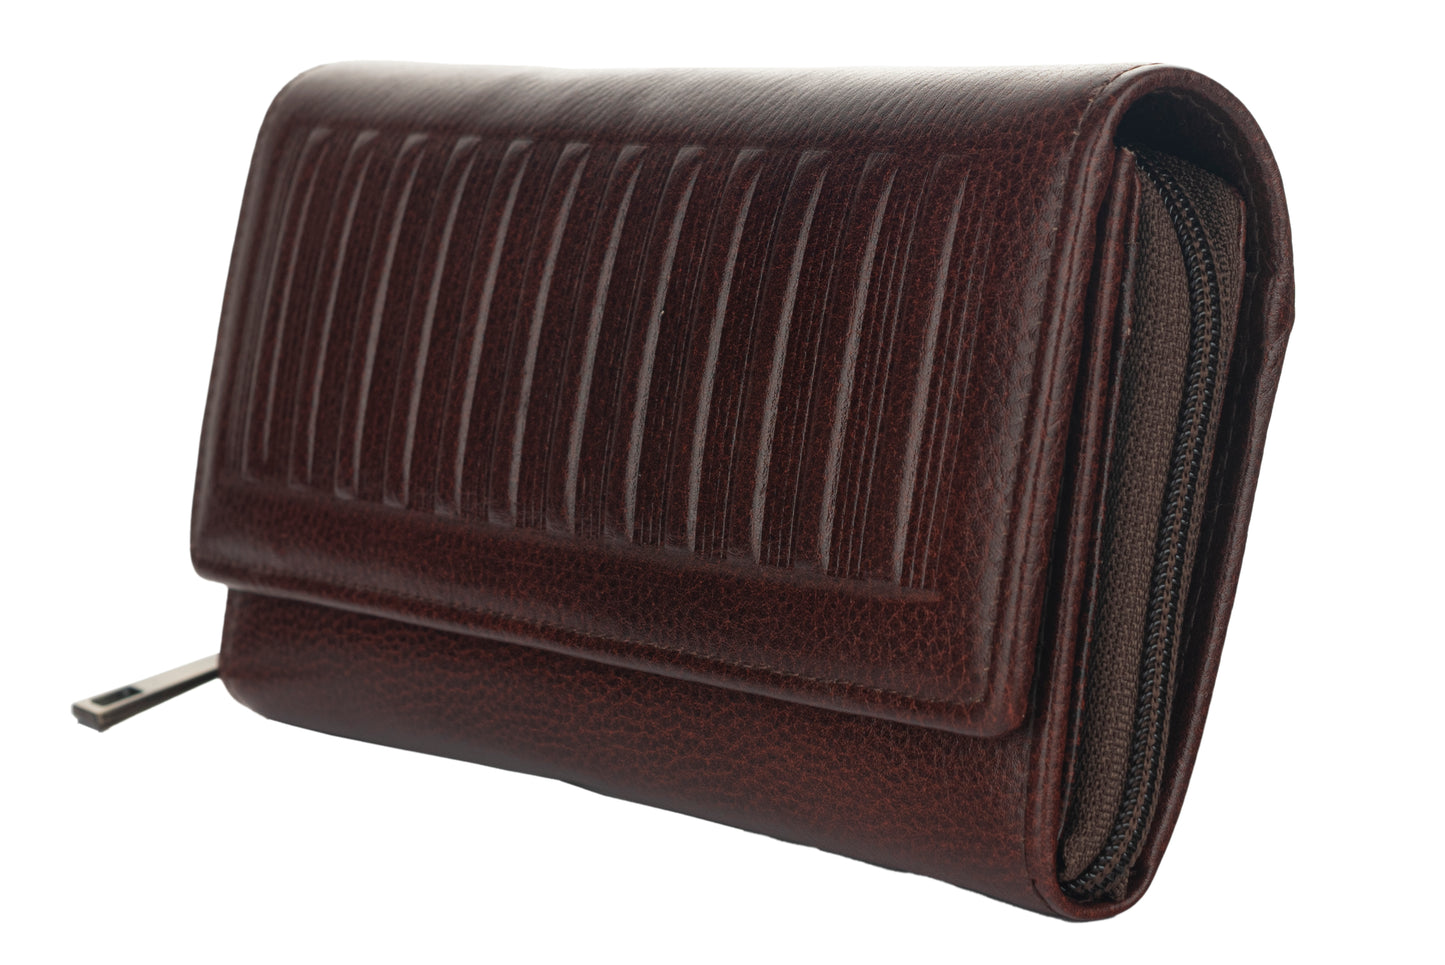 Shantiniketan Pure Leather Brown Clutch Handbag (7.5*4) for Women